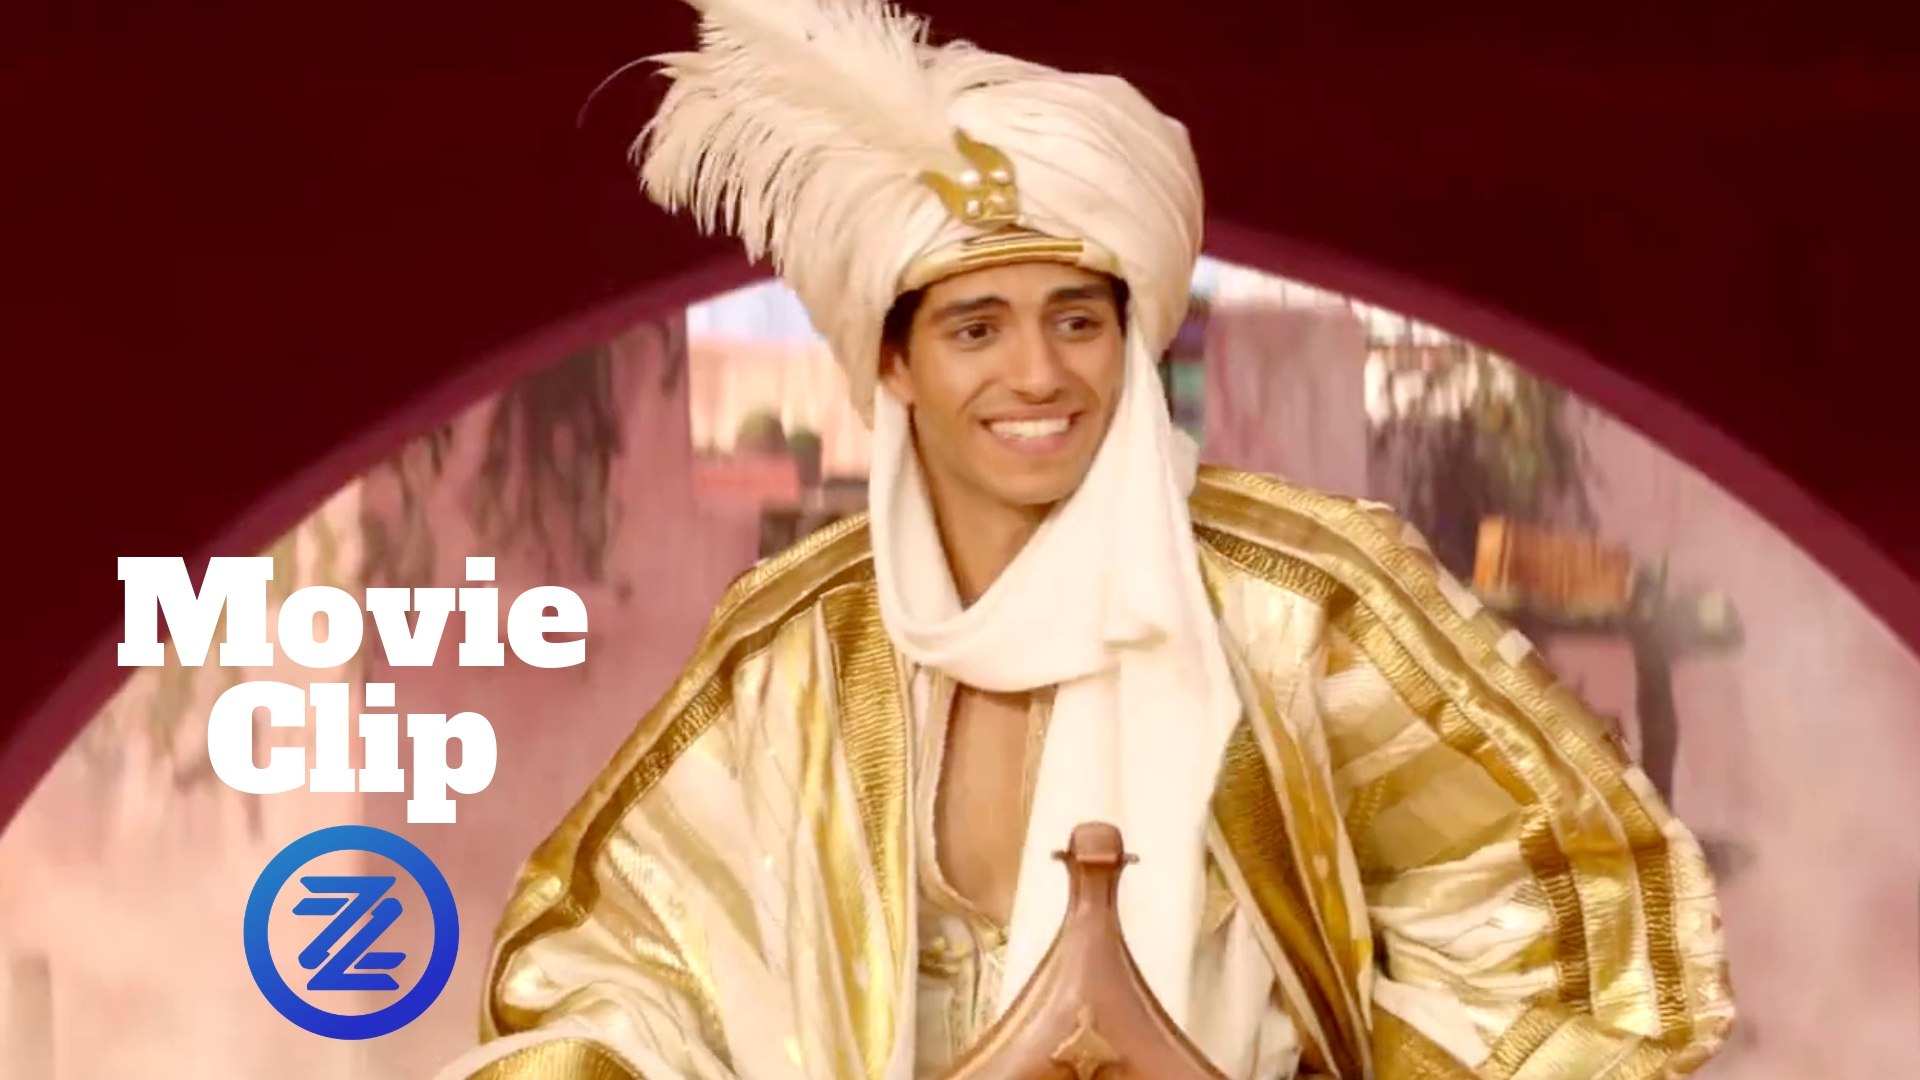 Aladdin Movie Clip - "Prince Ali" (2019) Will Smith, Mena Massoud Comedy  Movie HD - video Dailymotion